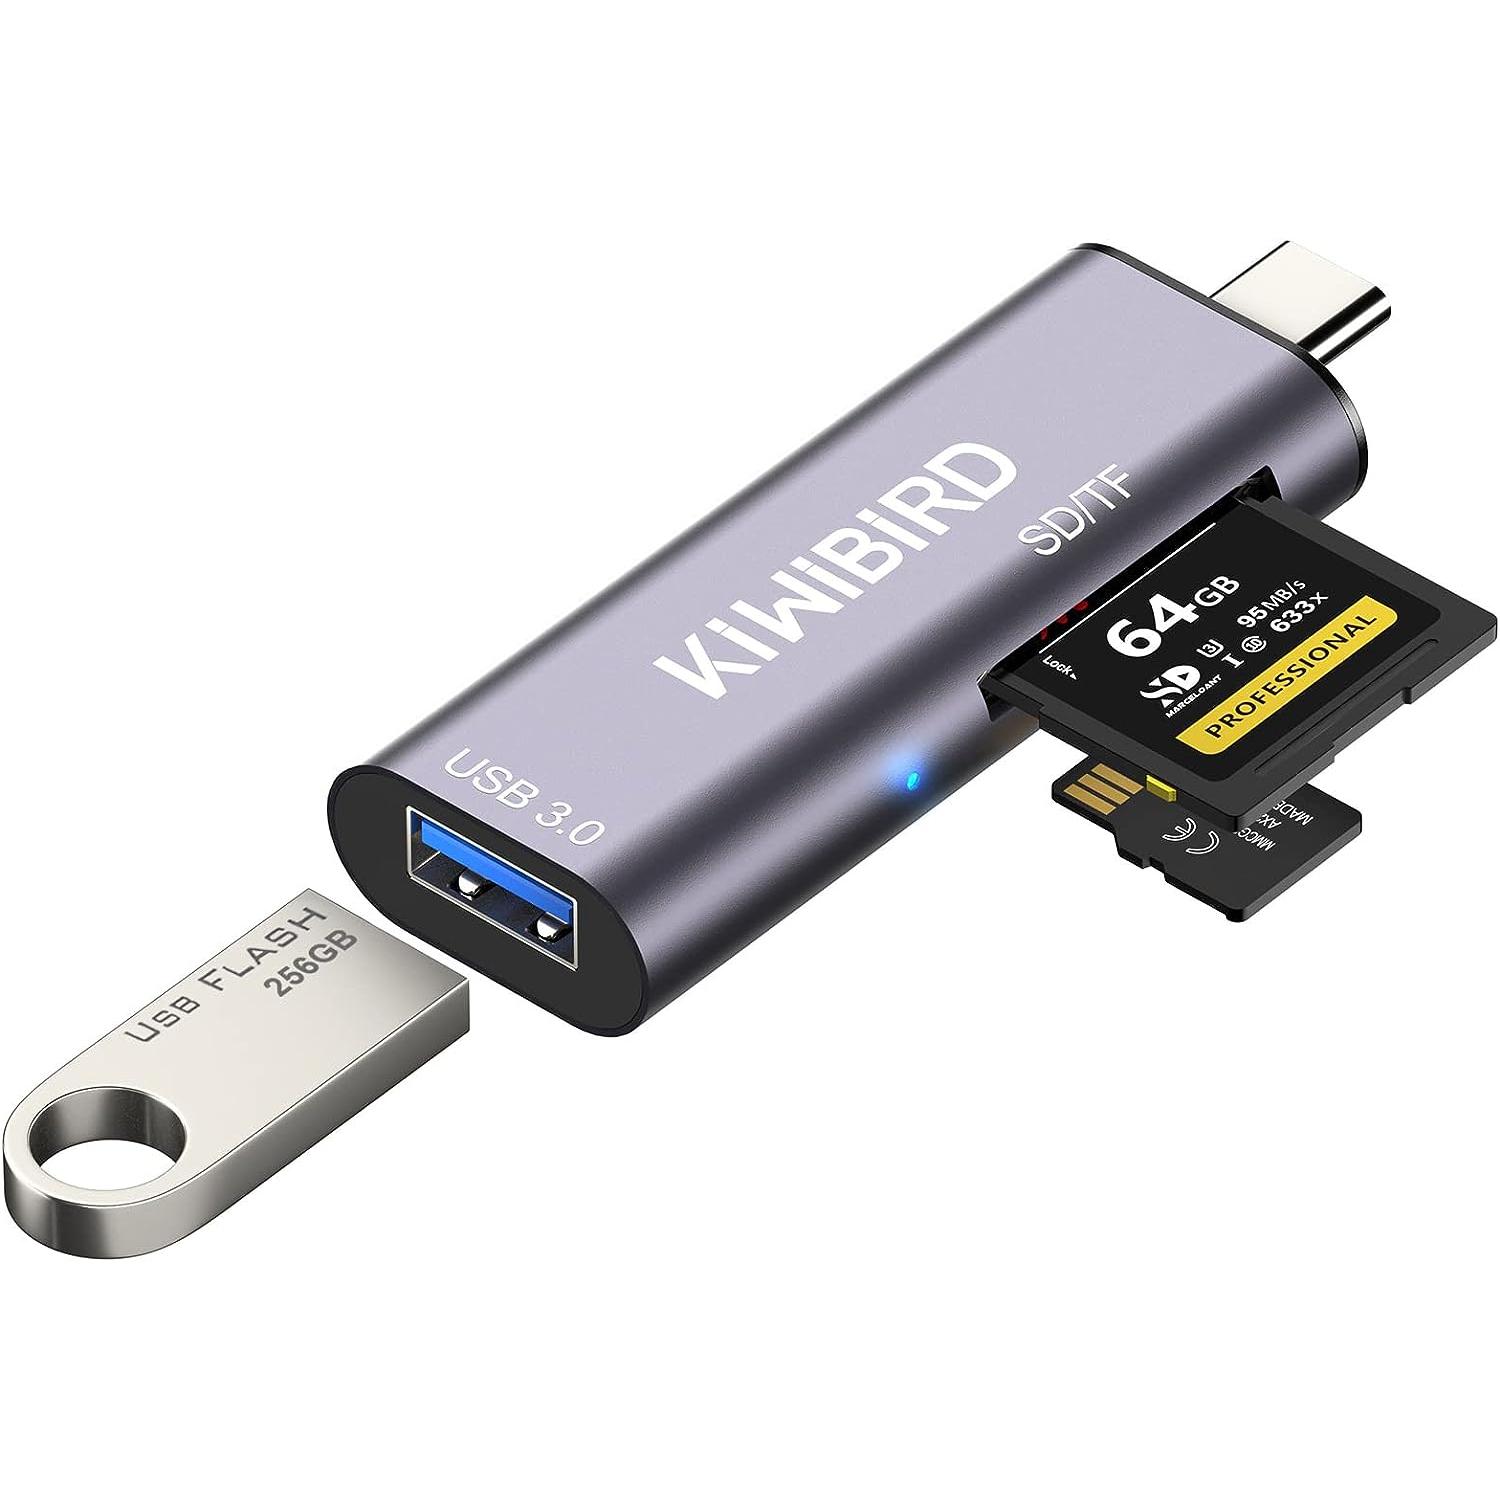 uni - Lector de tarjetas SD, adaptador USB 3.0 de alta velocidad a tarjeta  micro SD, lector de tarjetas de memoria de aluminio para computadora con